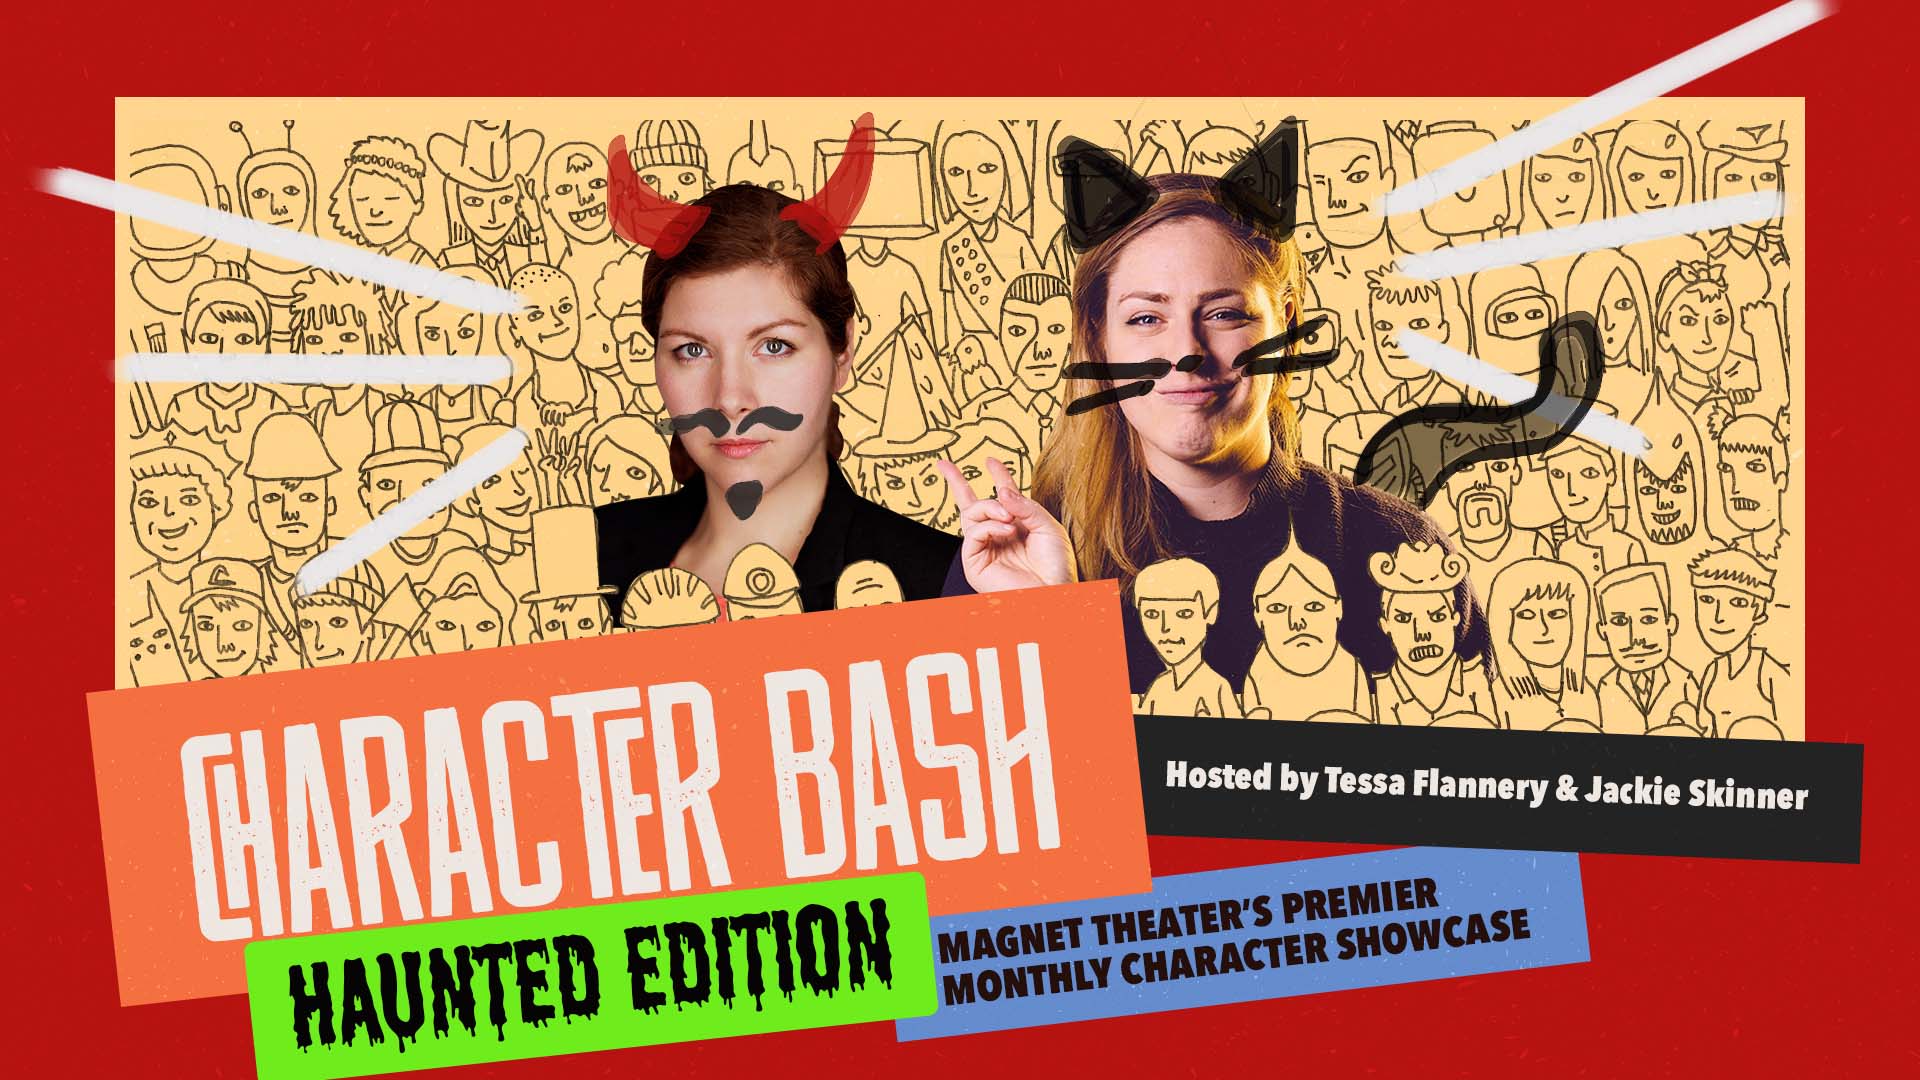 Character Bash: Haunted Edition